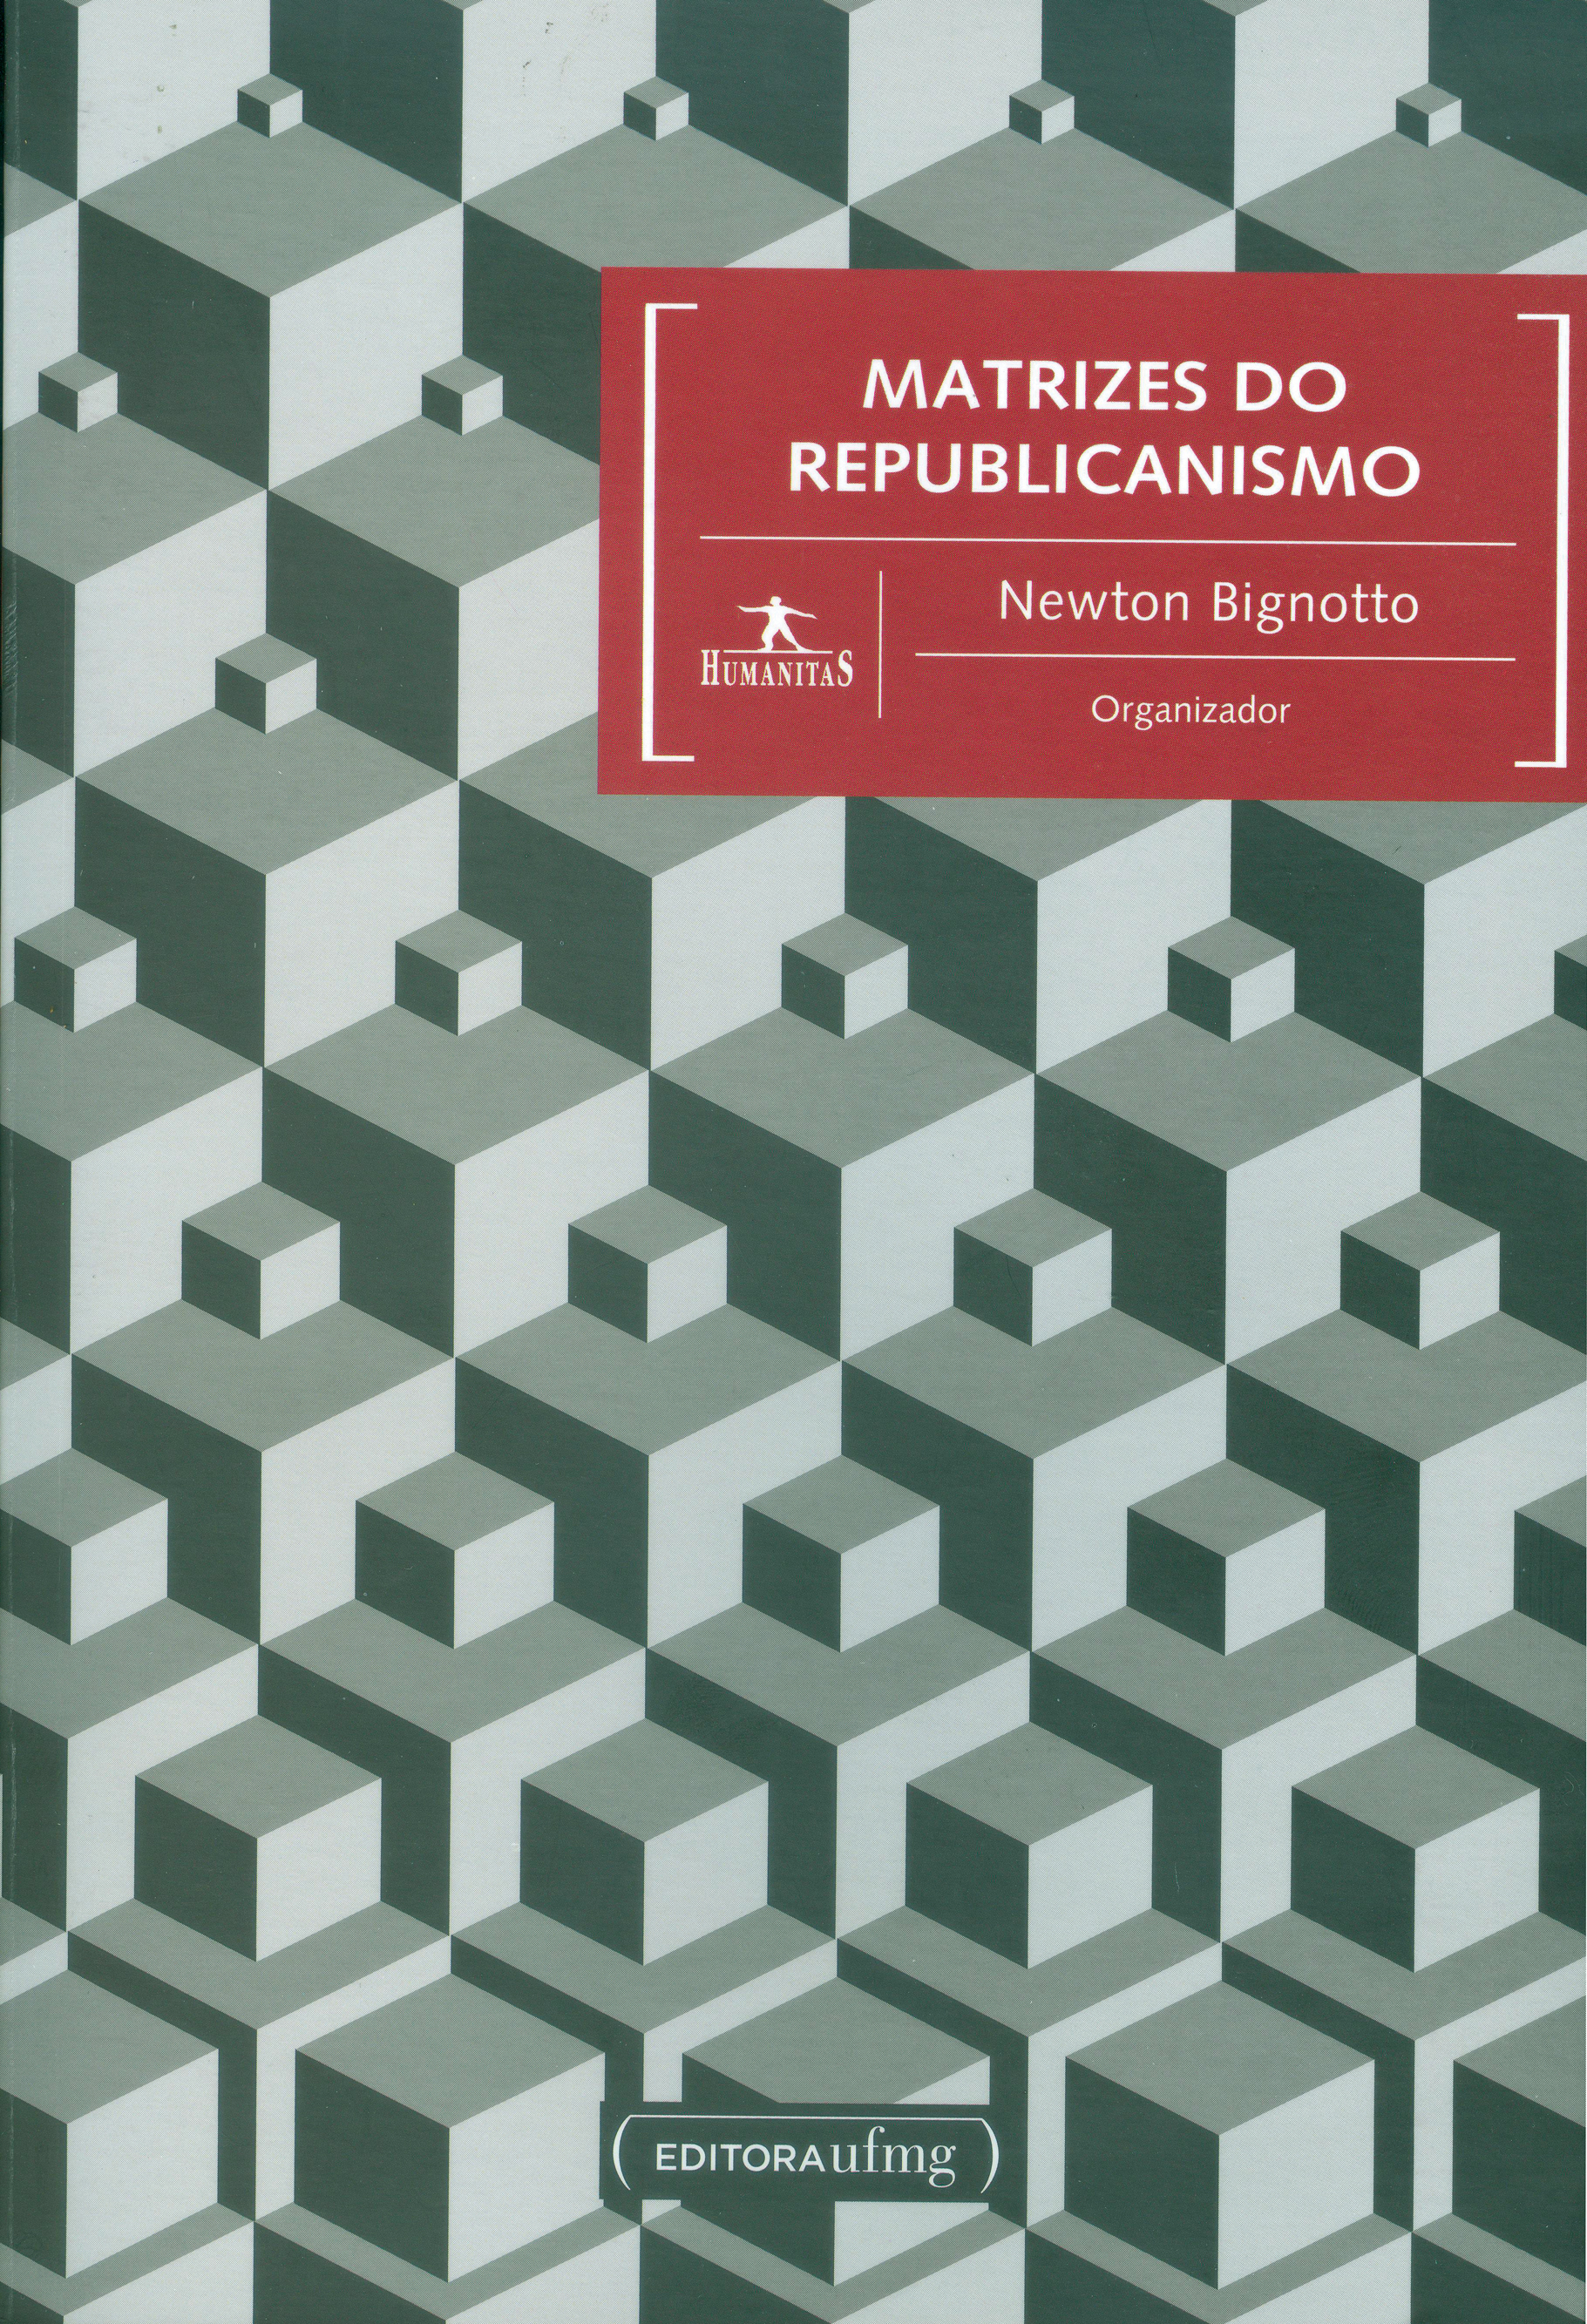 capa livro republicanismo